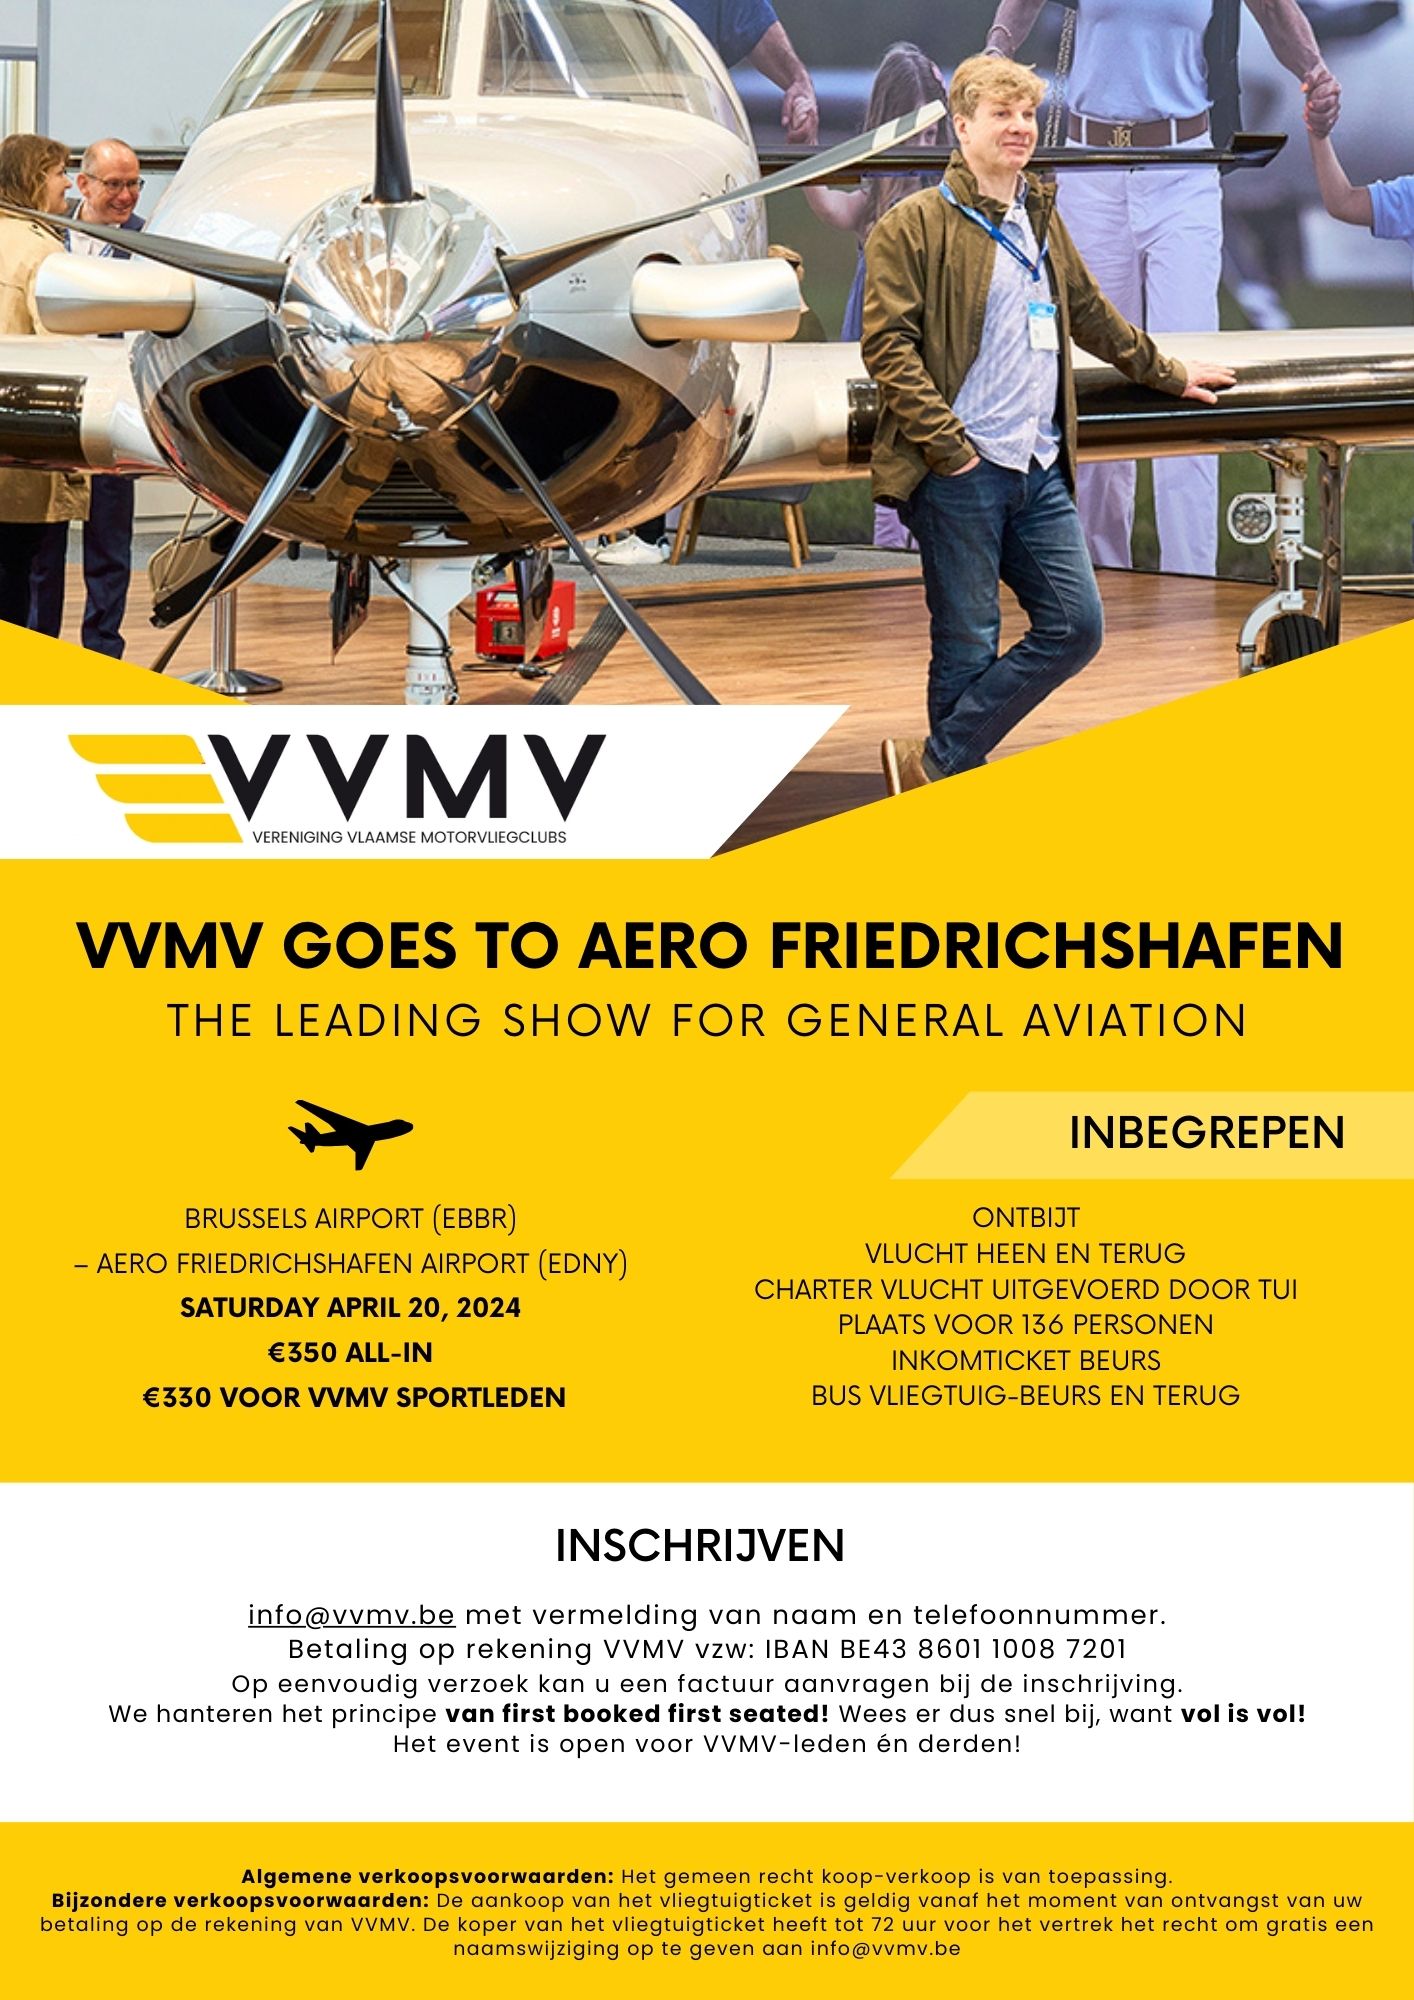 VVMV goes to Aero Friedrichshafen 20-04-2024